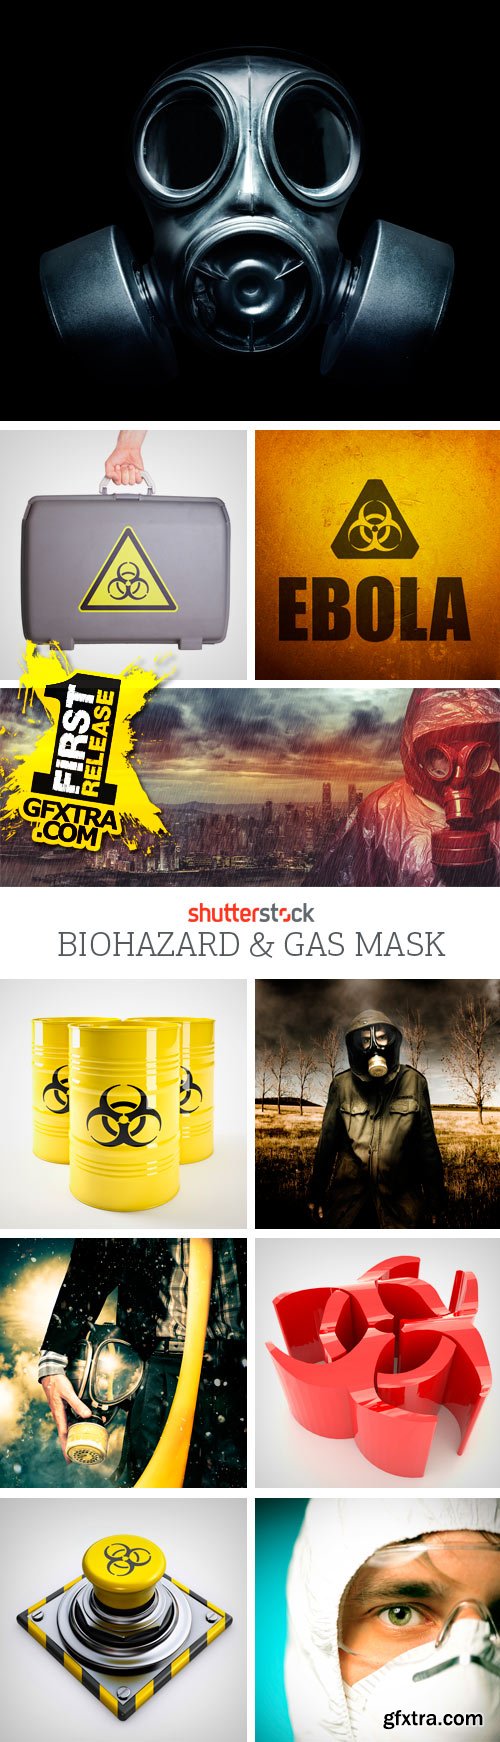 Amazing SS - Biohazard & Gas Mask, 25xJPGs